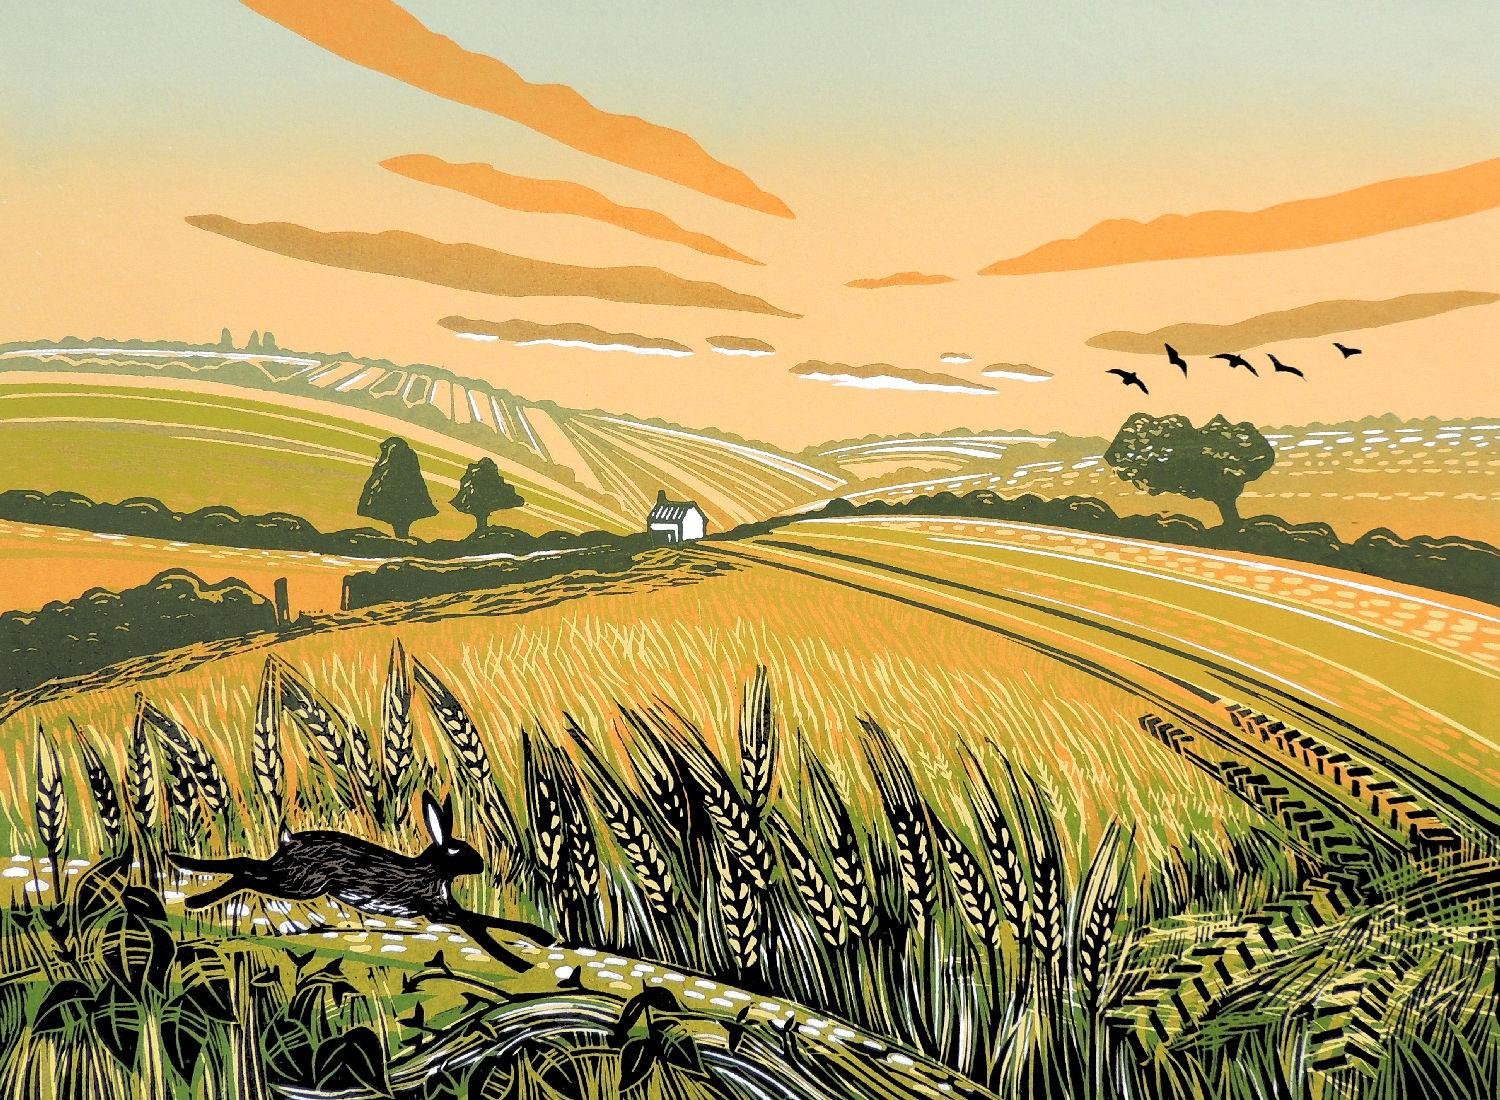 Rob Barnes Landscape Print - Running Through The Barley, Limited edition art print, Landscape, Nature, Fields